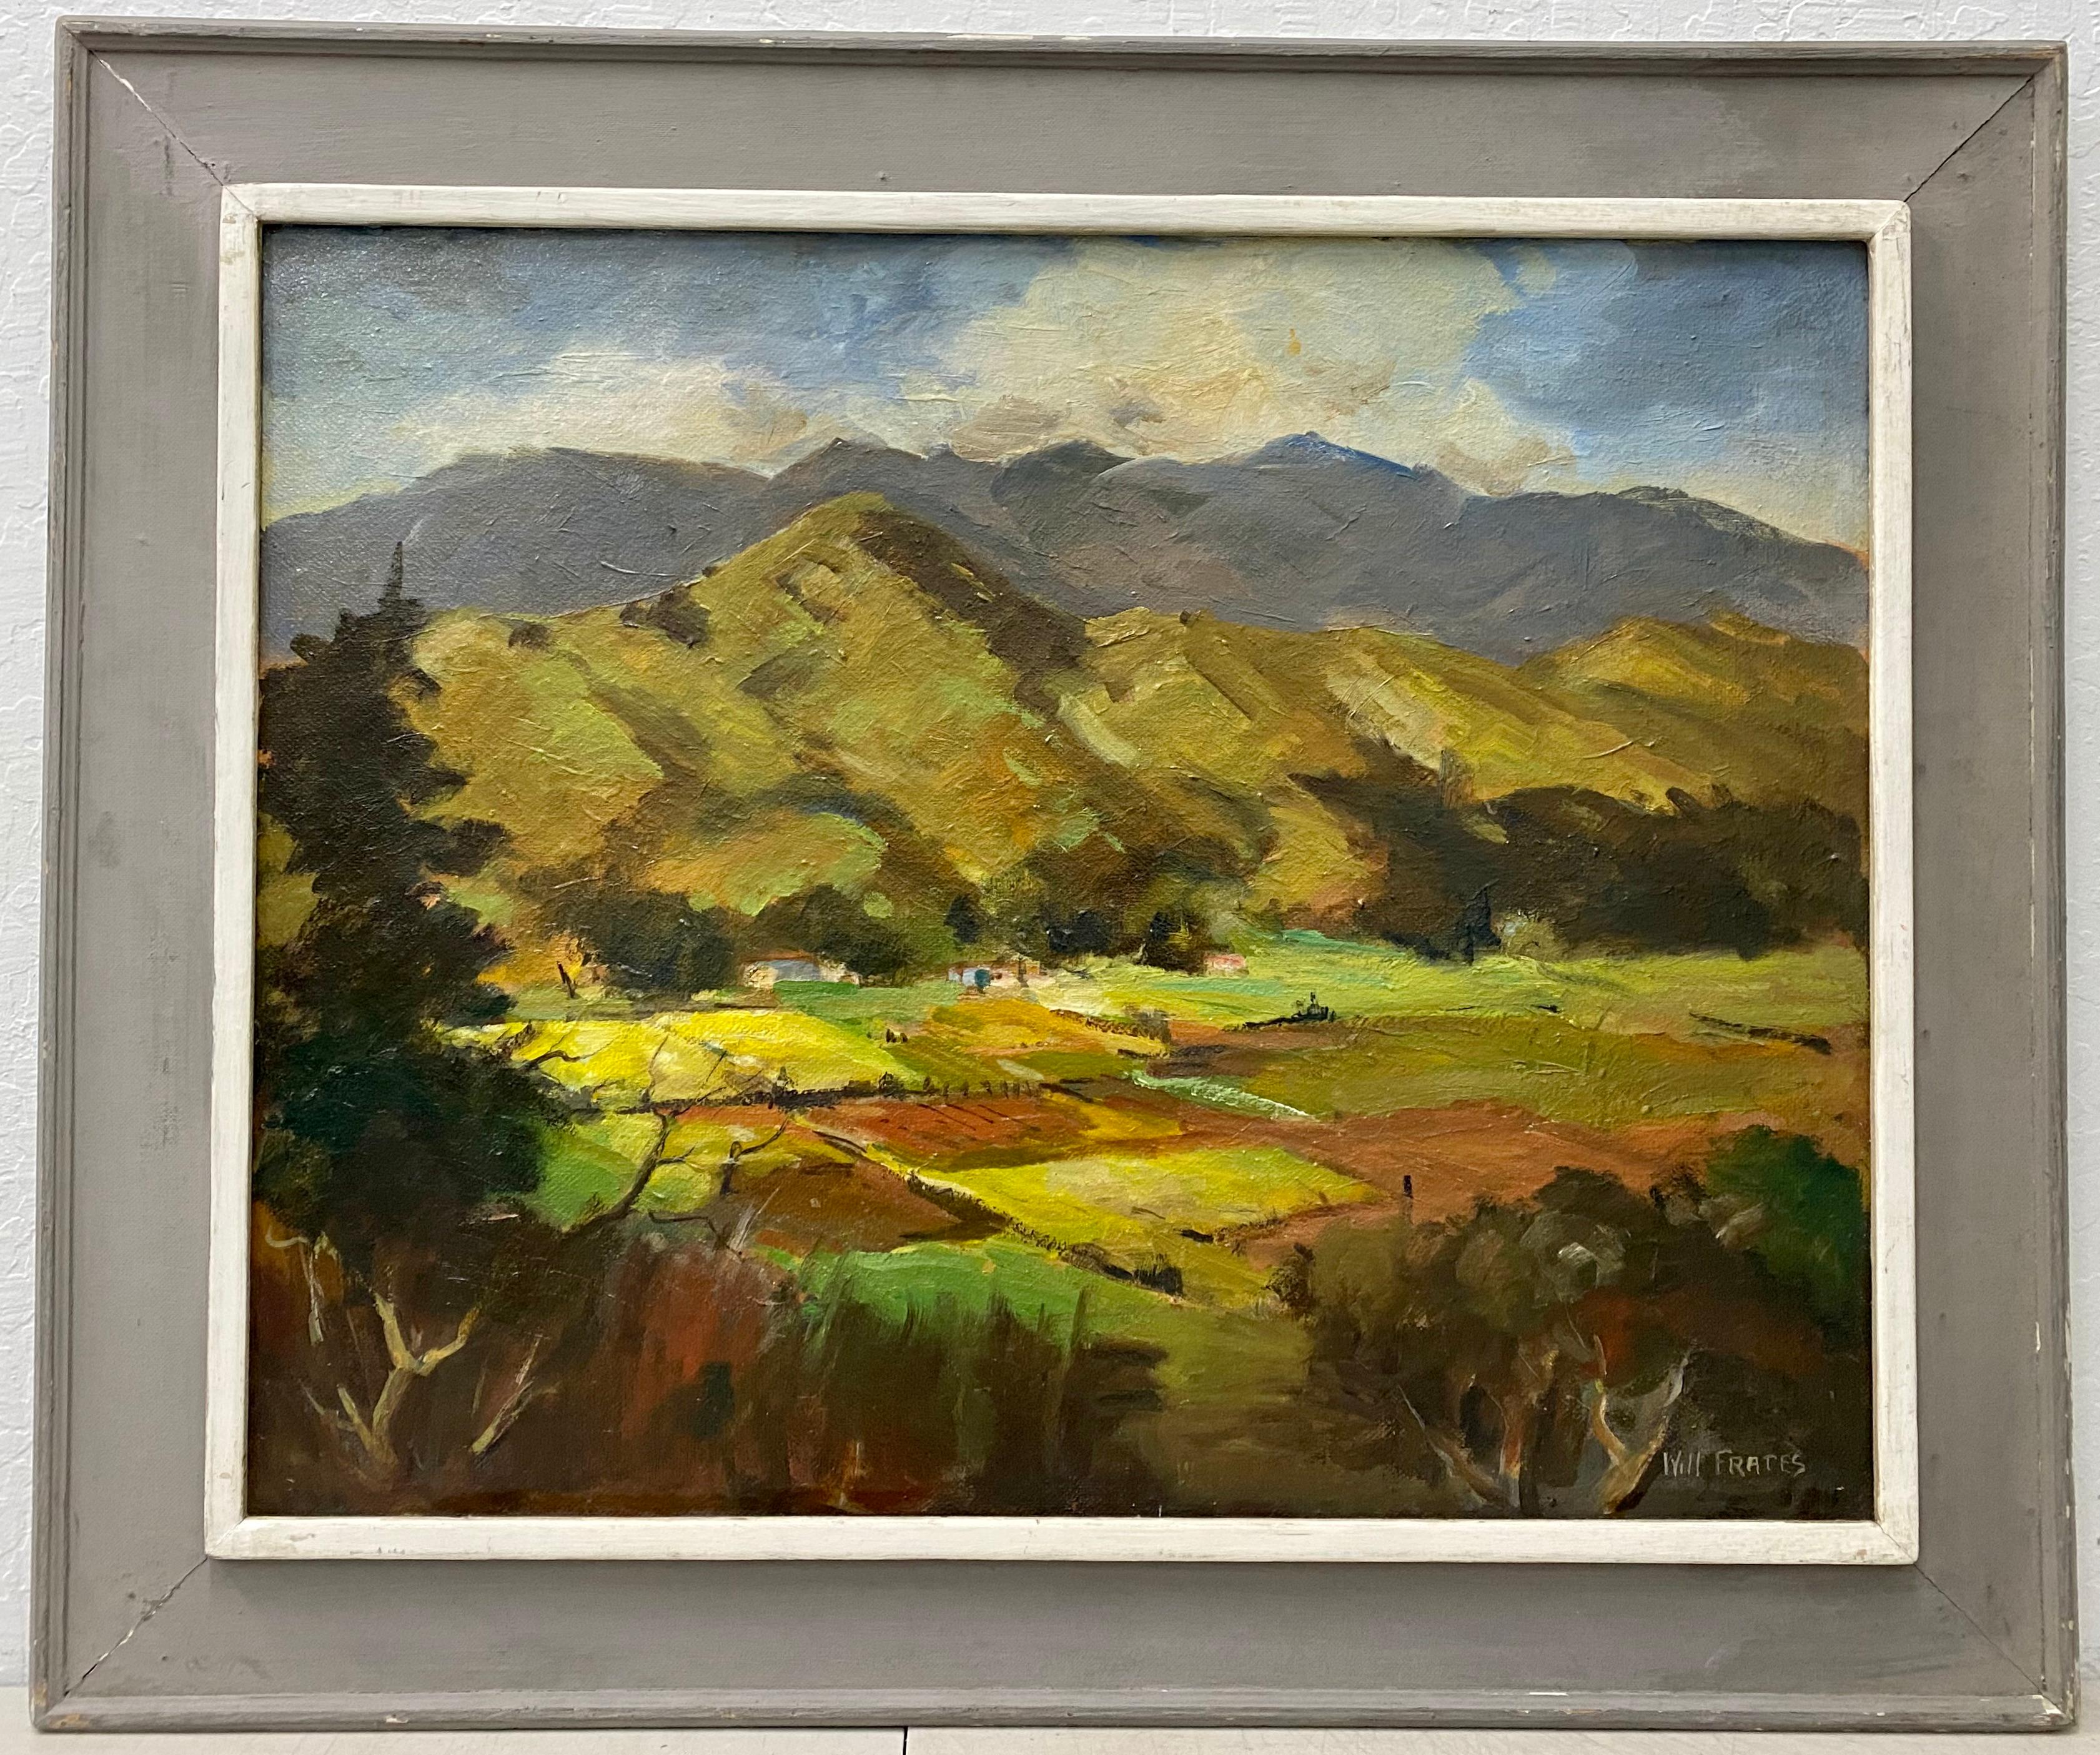 William Frates Landscape Painting - William (Will) Frates "Fertile Valley" Original Oil Painting C.1950